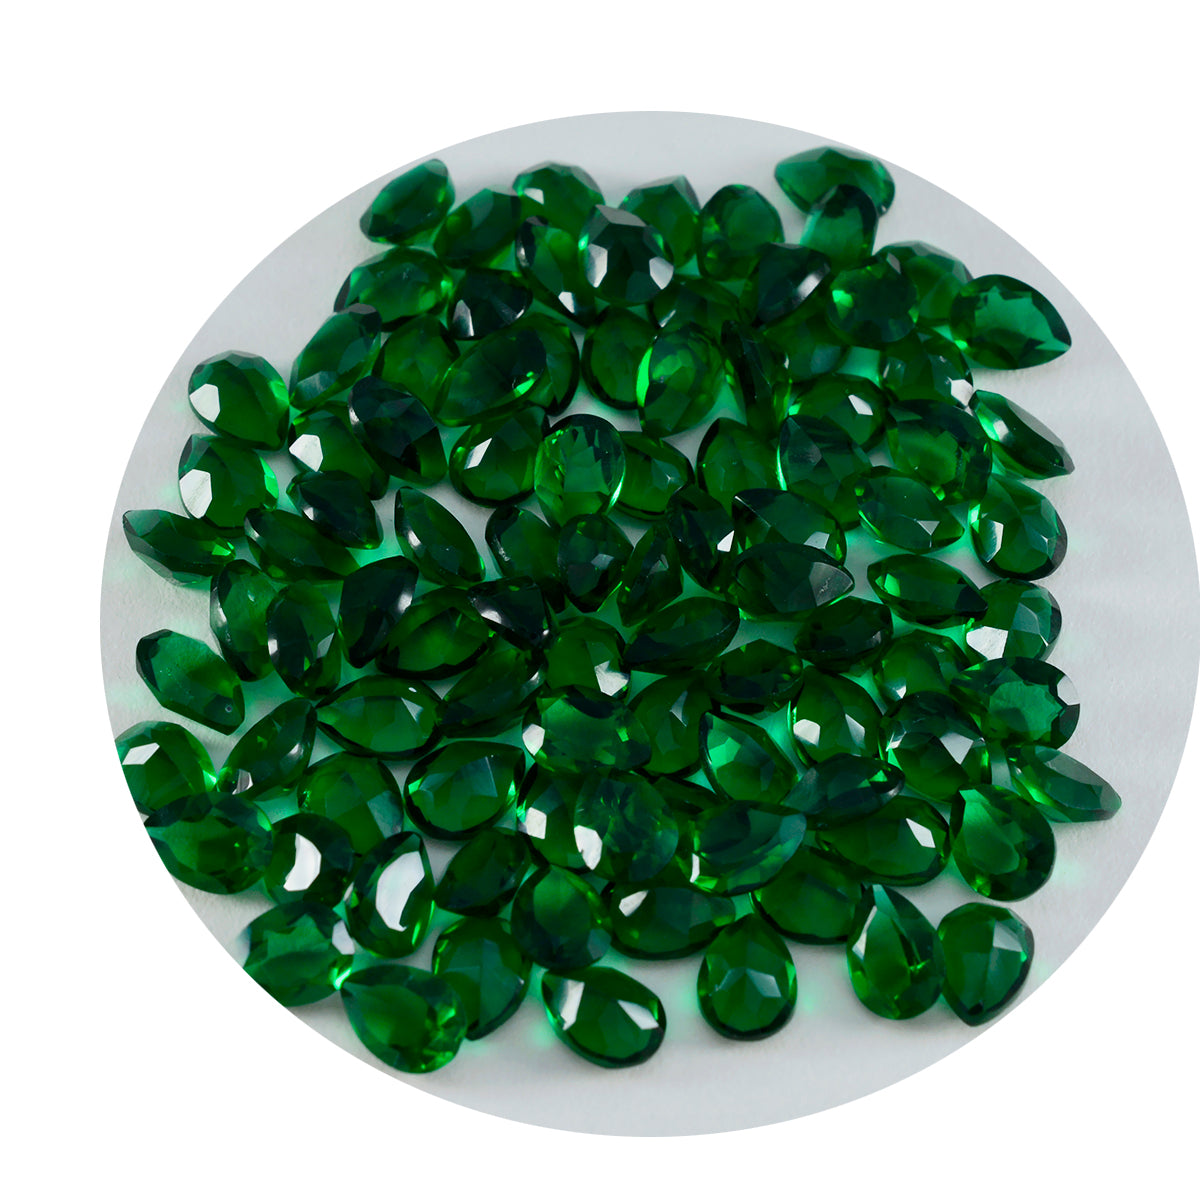 Riyogems 1 Stück grüner Smaragd, CZ, facettiert, 4 x 6 mm, Birnenform, hübscher, hochwertiger, loser Edelstein